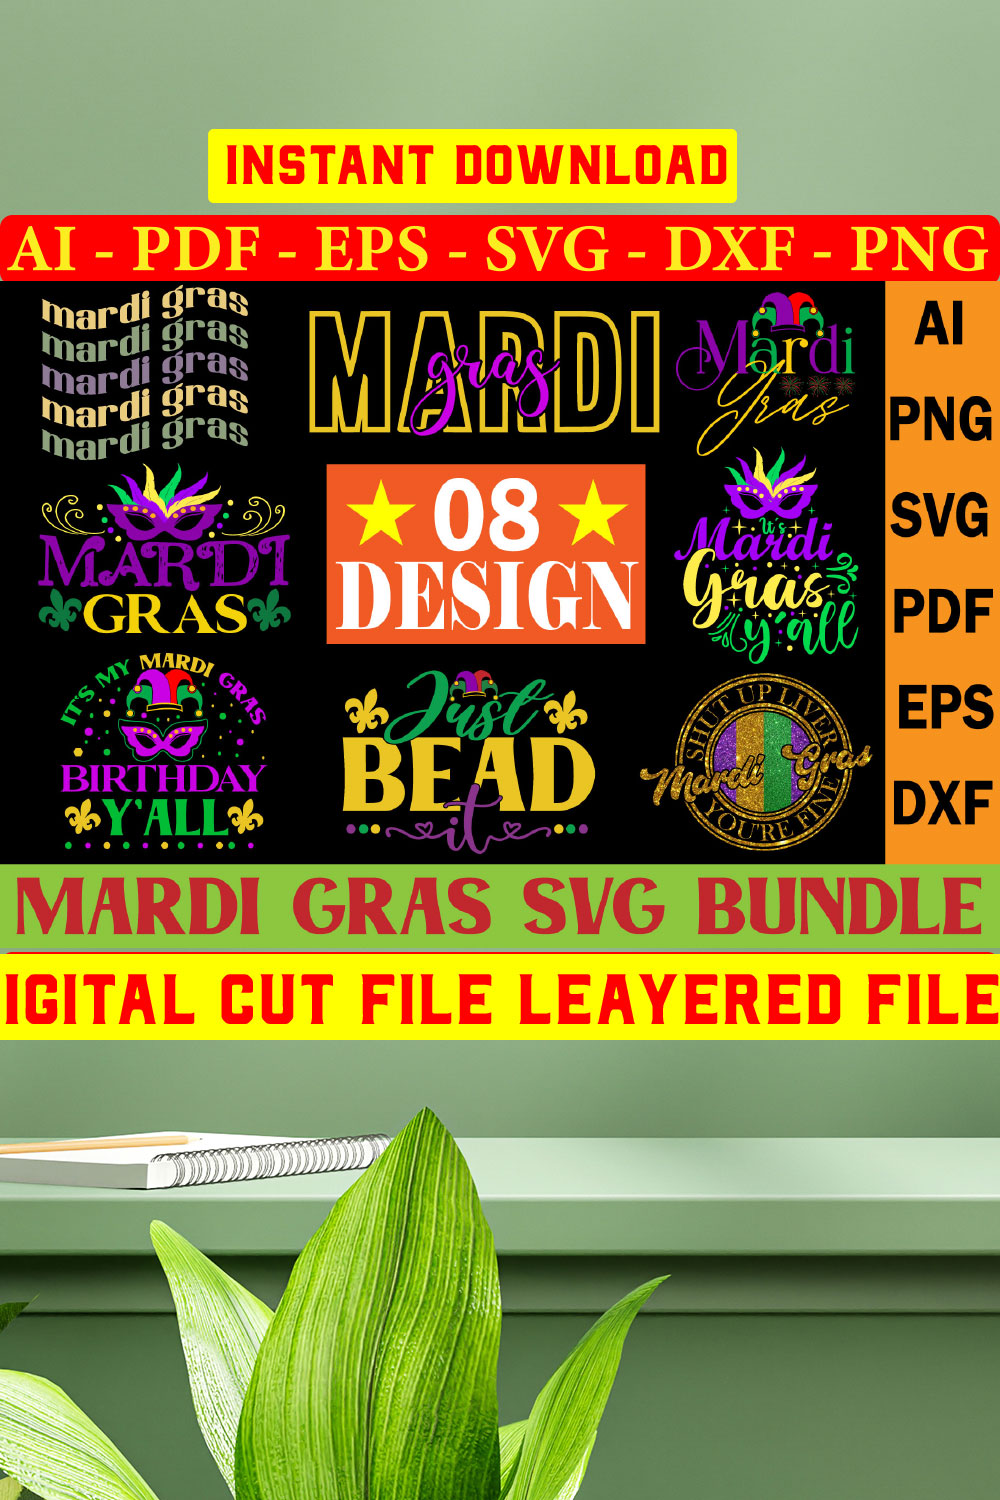 Mardi Gras Beads SVG T-shirt Bundle Vol-4 pinterest preview image.